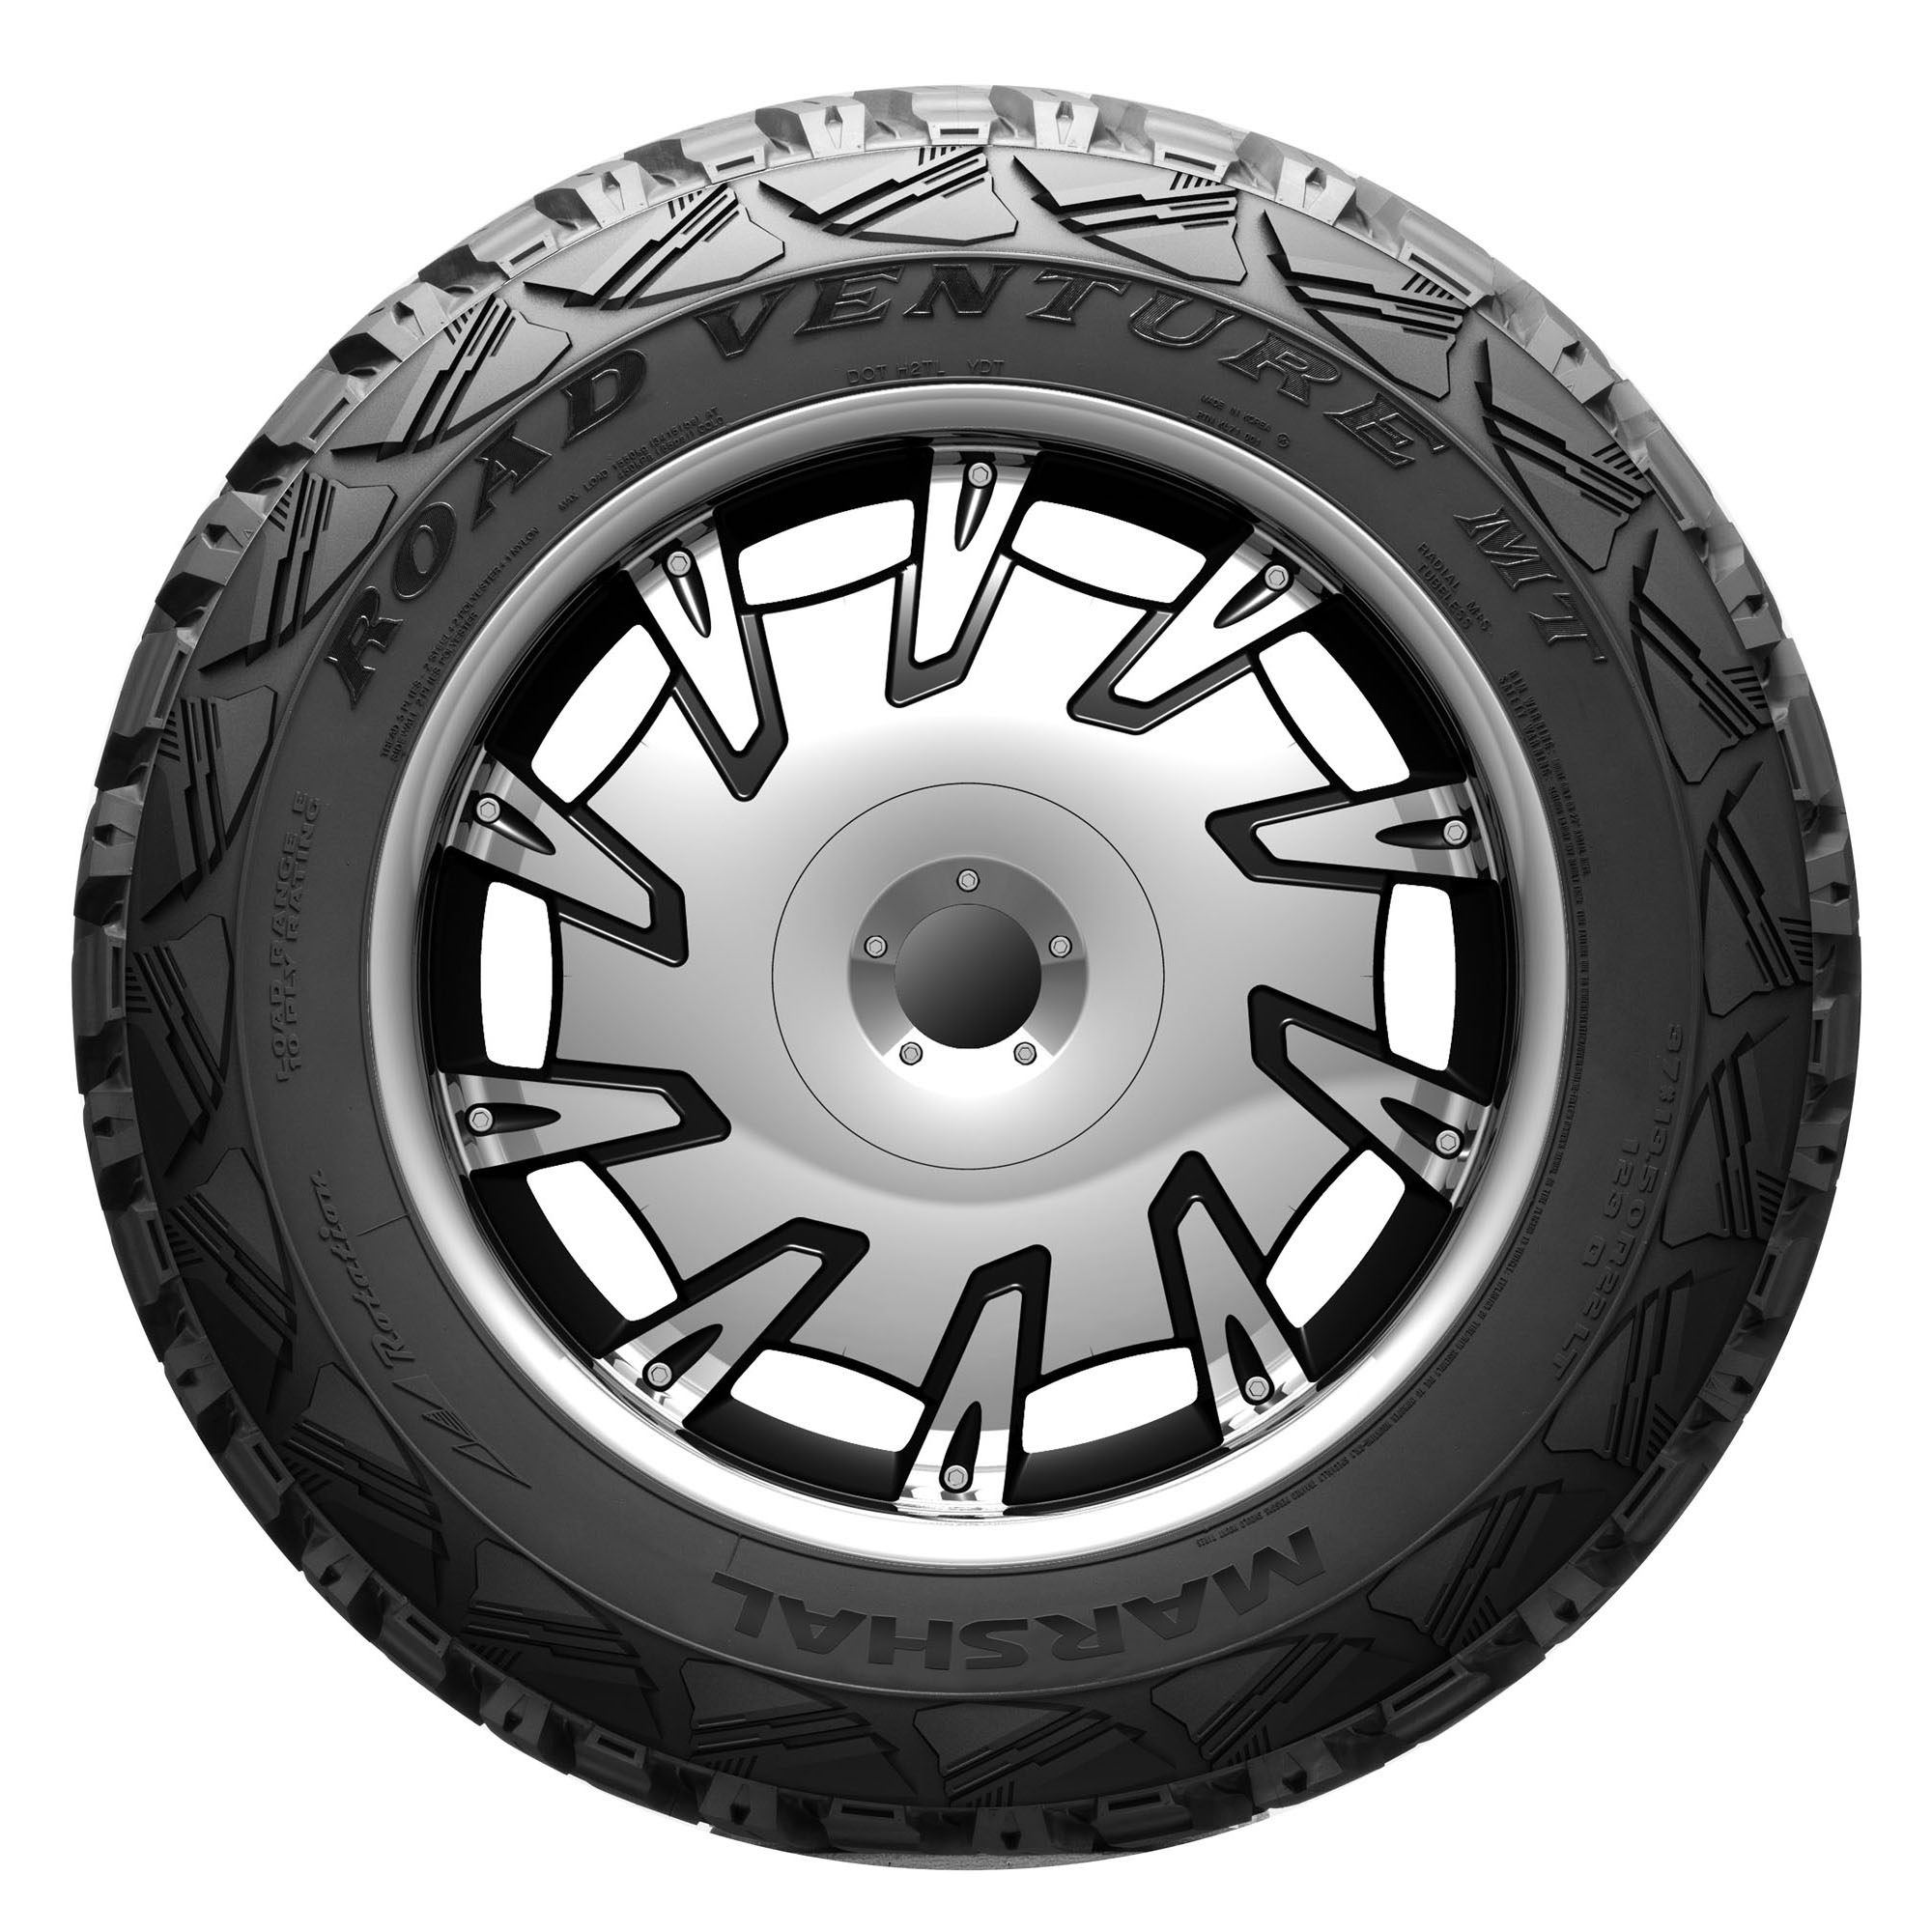 2785014 - Tires Kumho Road eBay New Venture 27 27x8.5r14 | Mt 2 Kl71 14 8.5